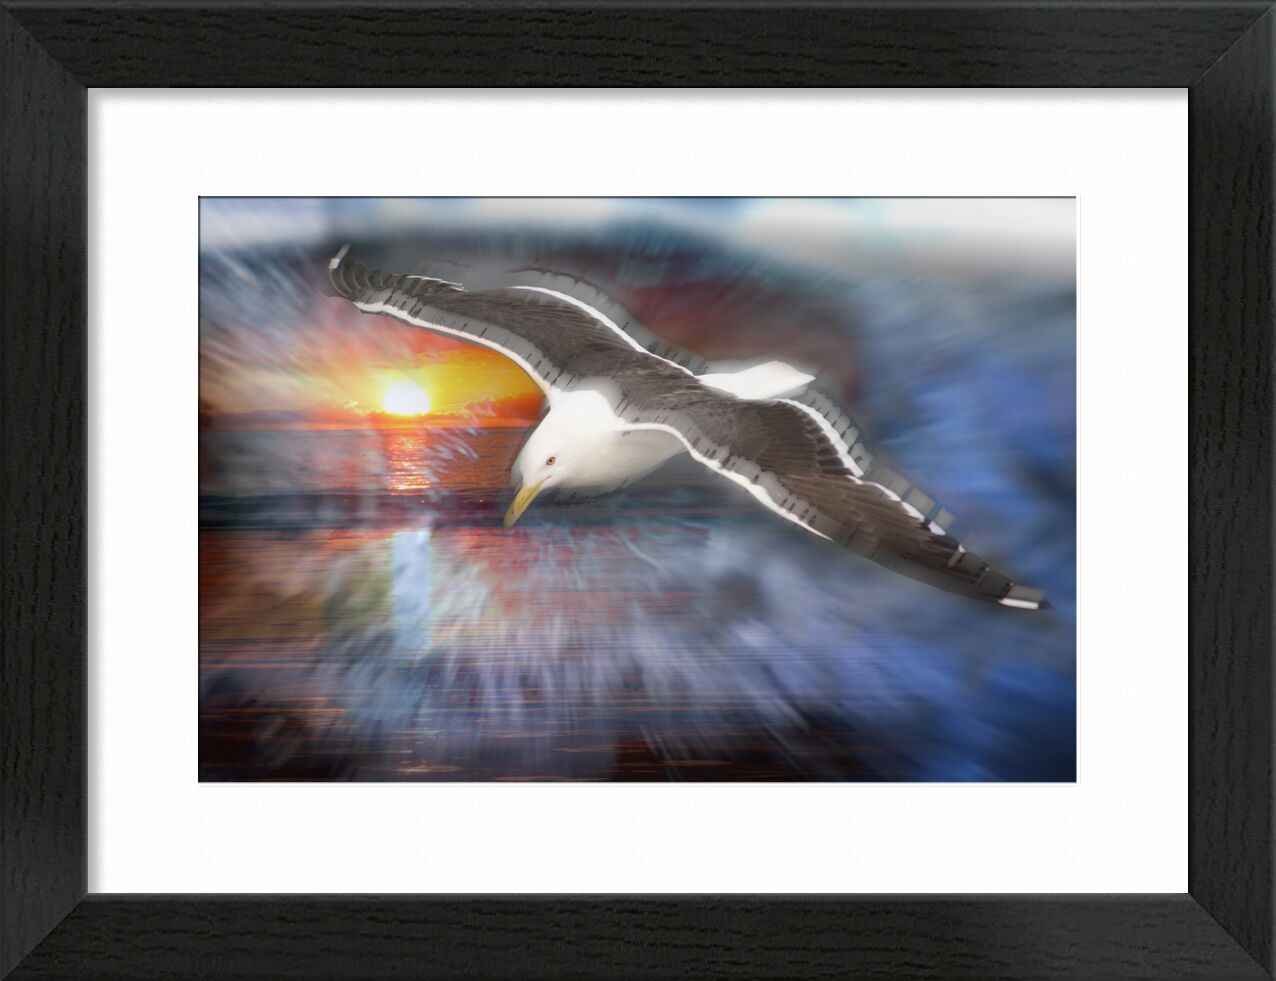 Flight of a seagull from Adam da Silva, Prodi Art, gull, flight, Sun, blue, bird, sea, ocean, beach